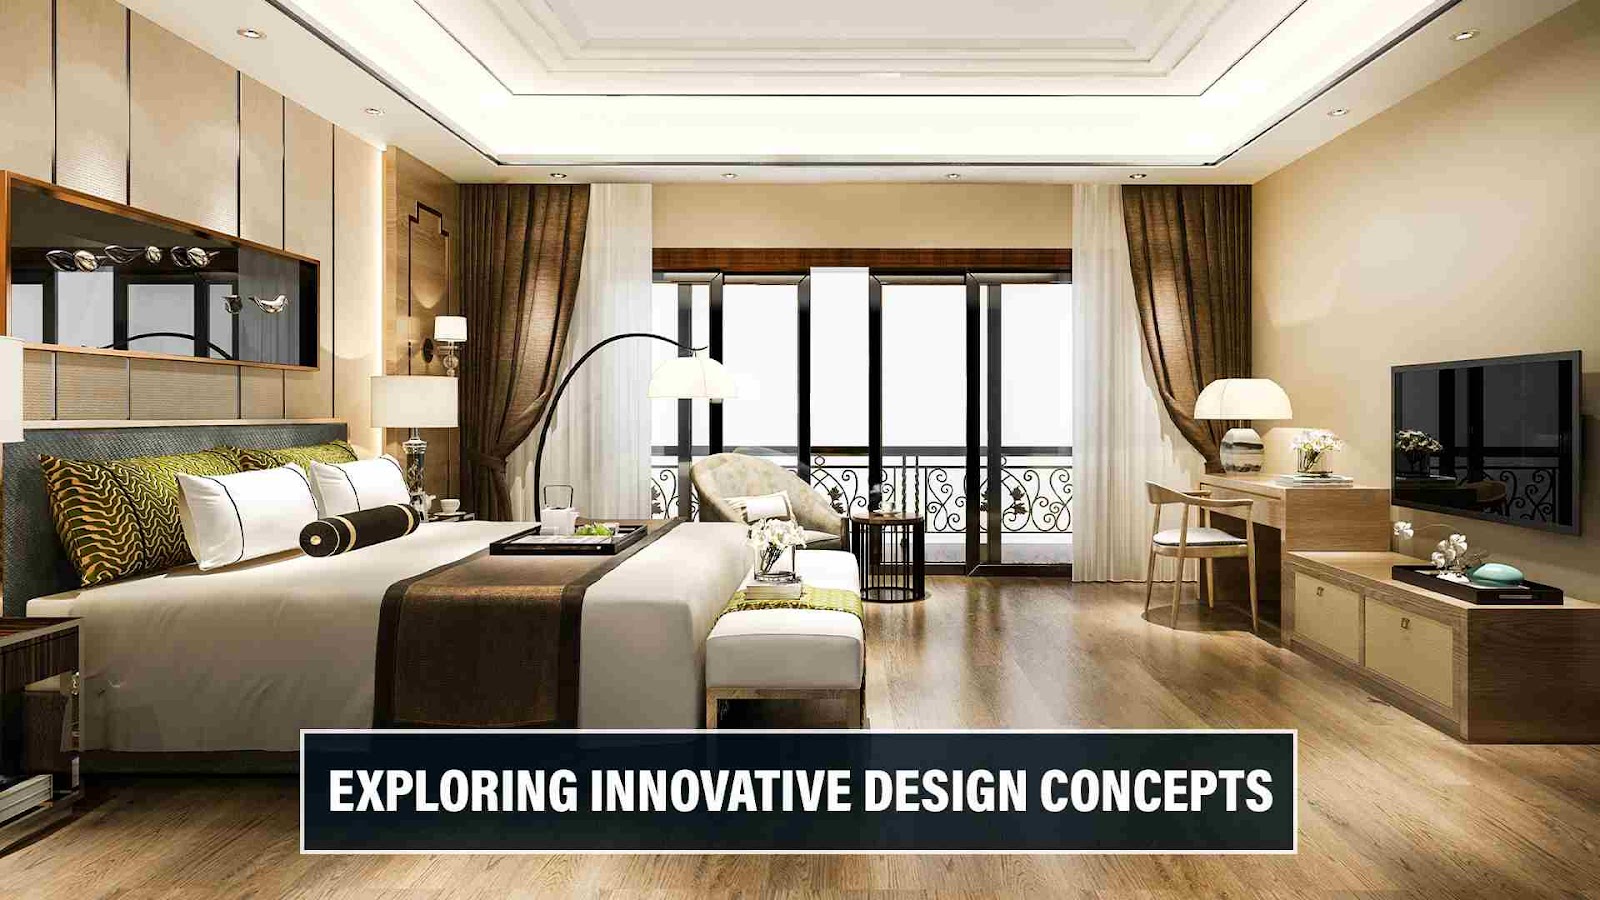 Cool Bedrooms: Exploring Innovative Design Concepts